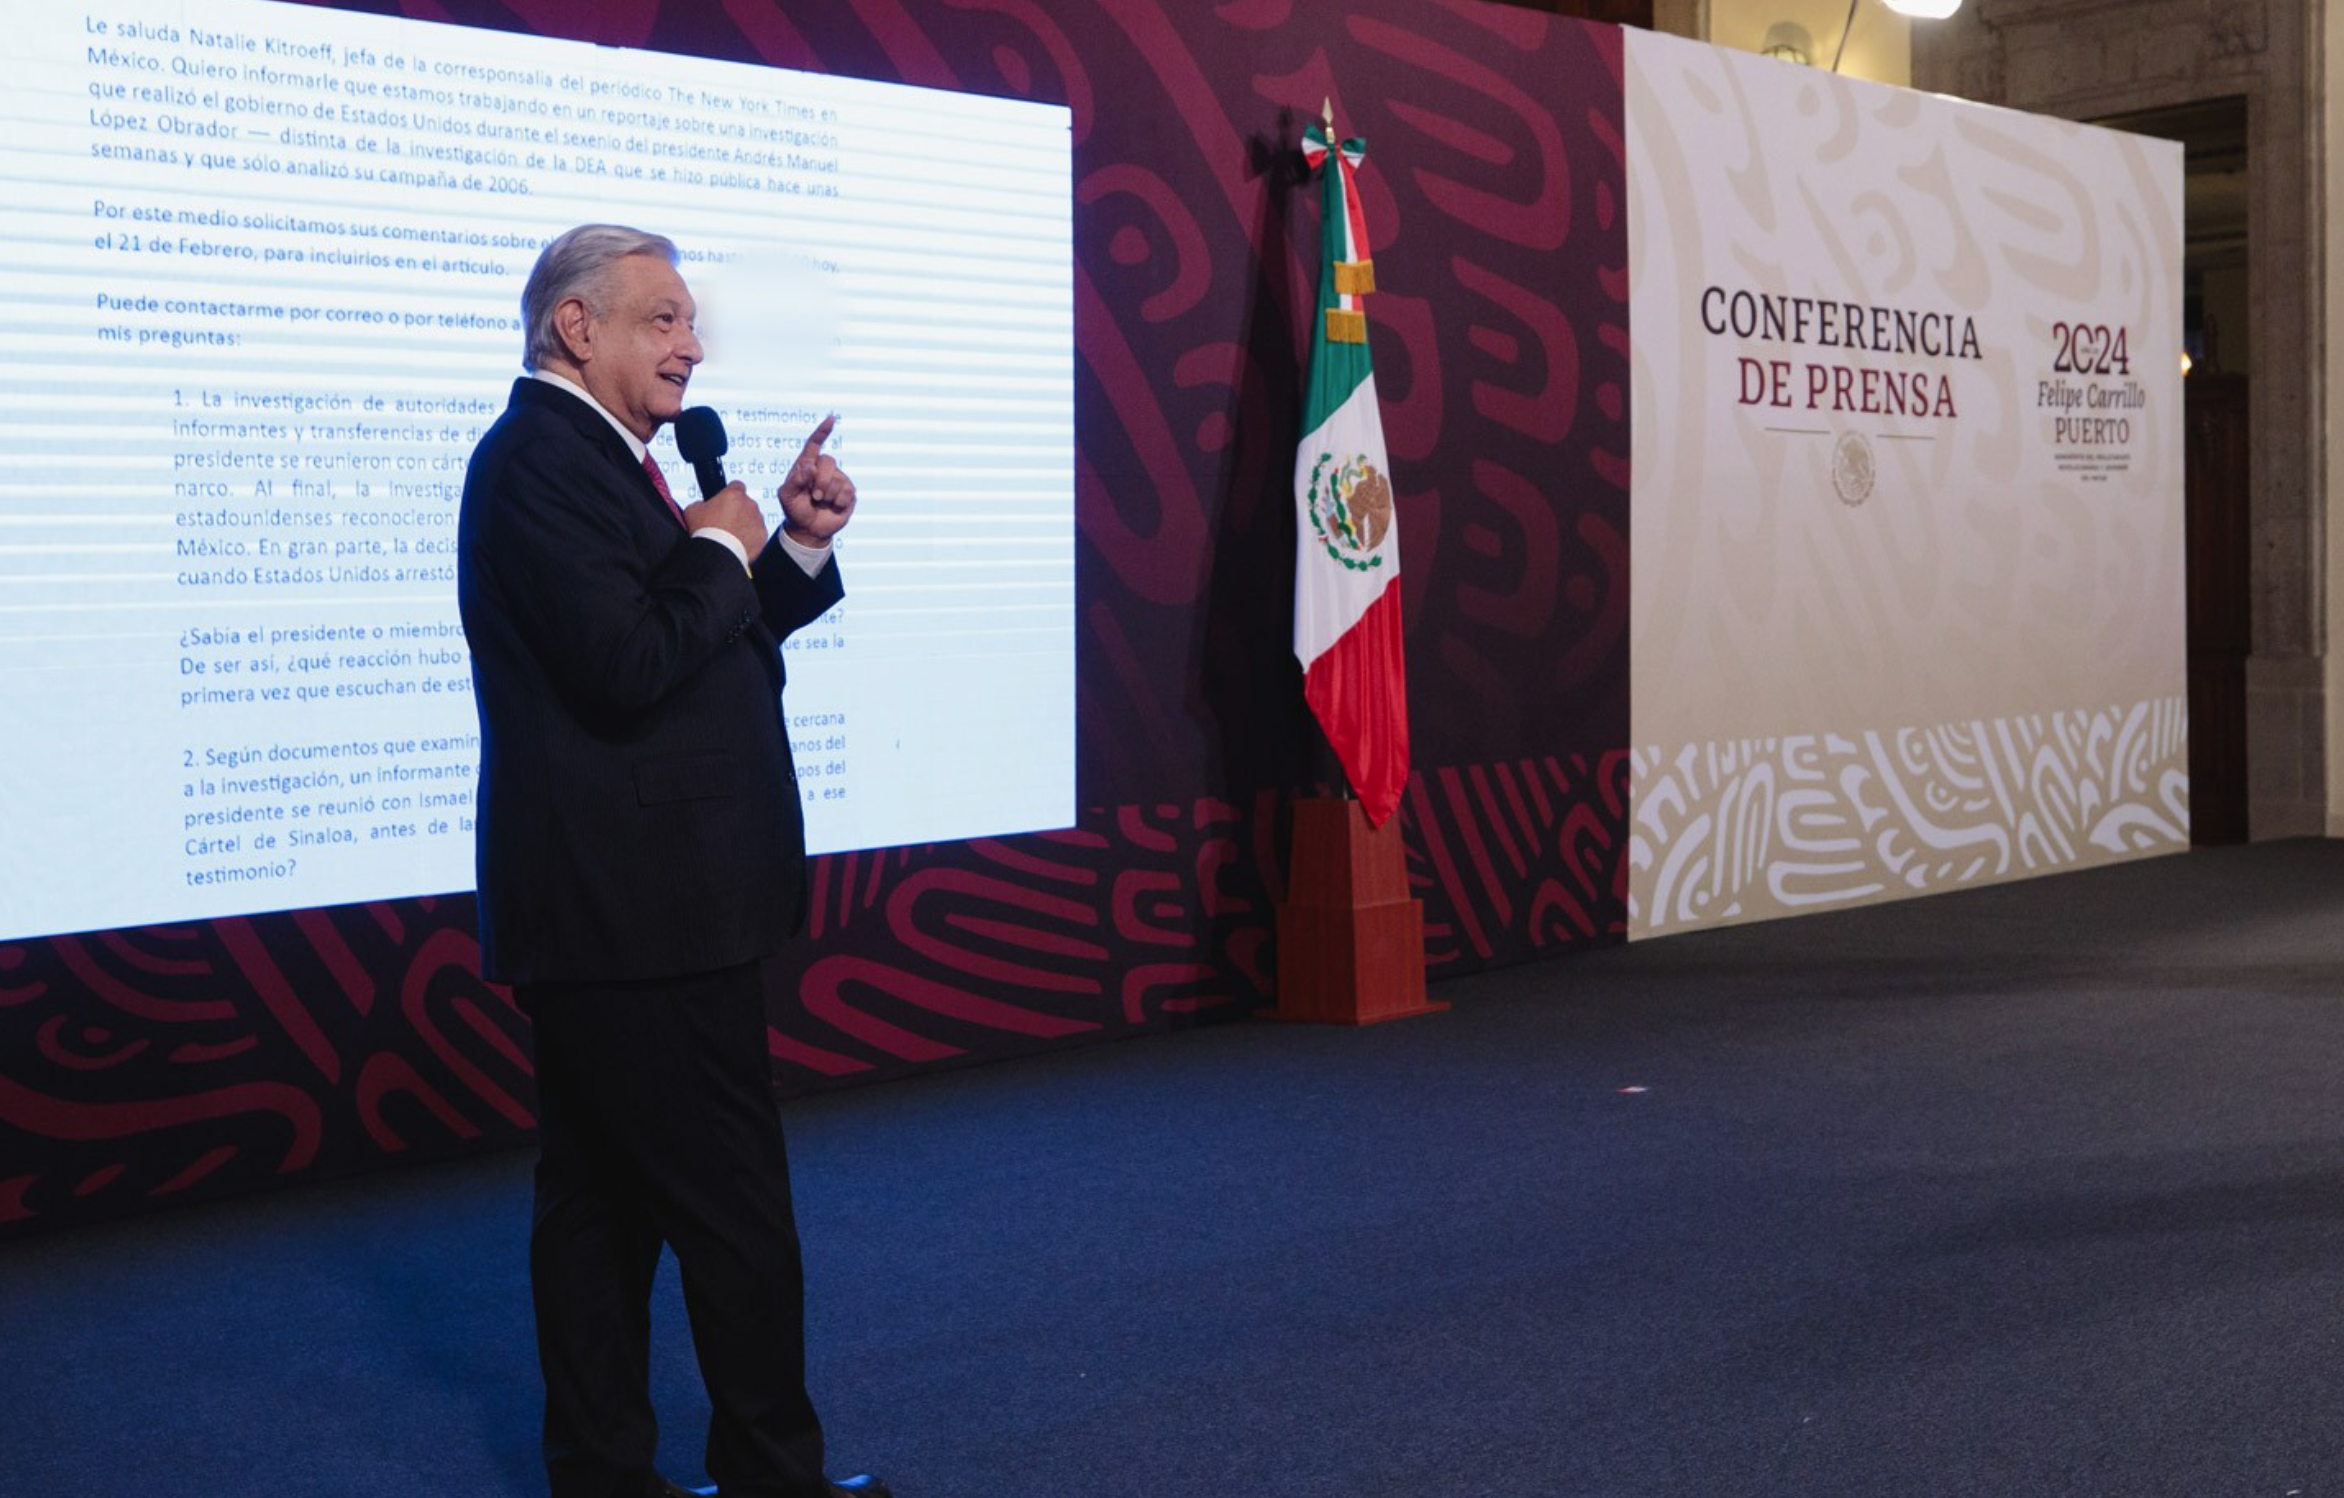 YouTube responde a la acusación de ‘censura’ de López Obrador